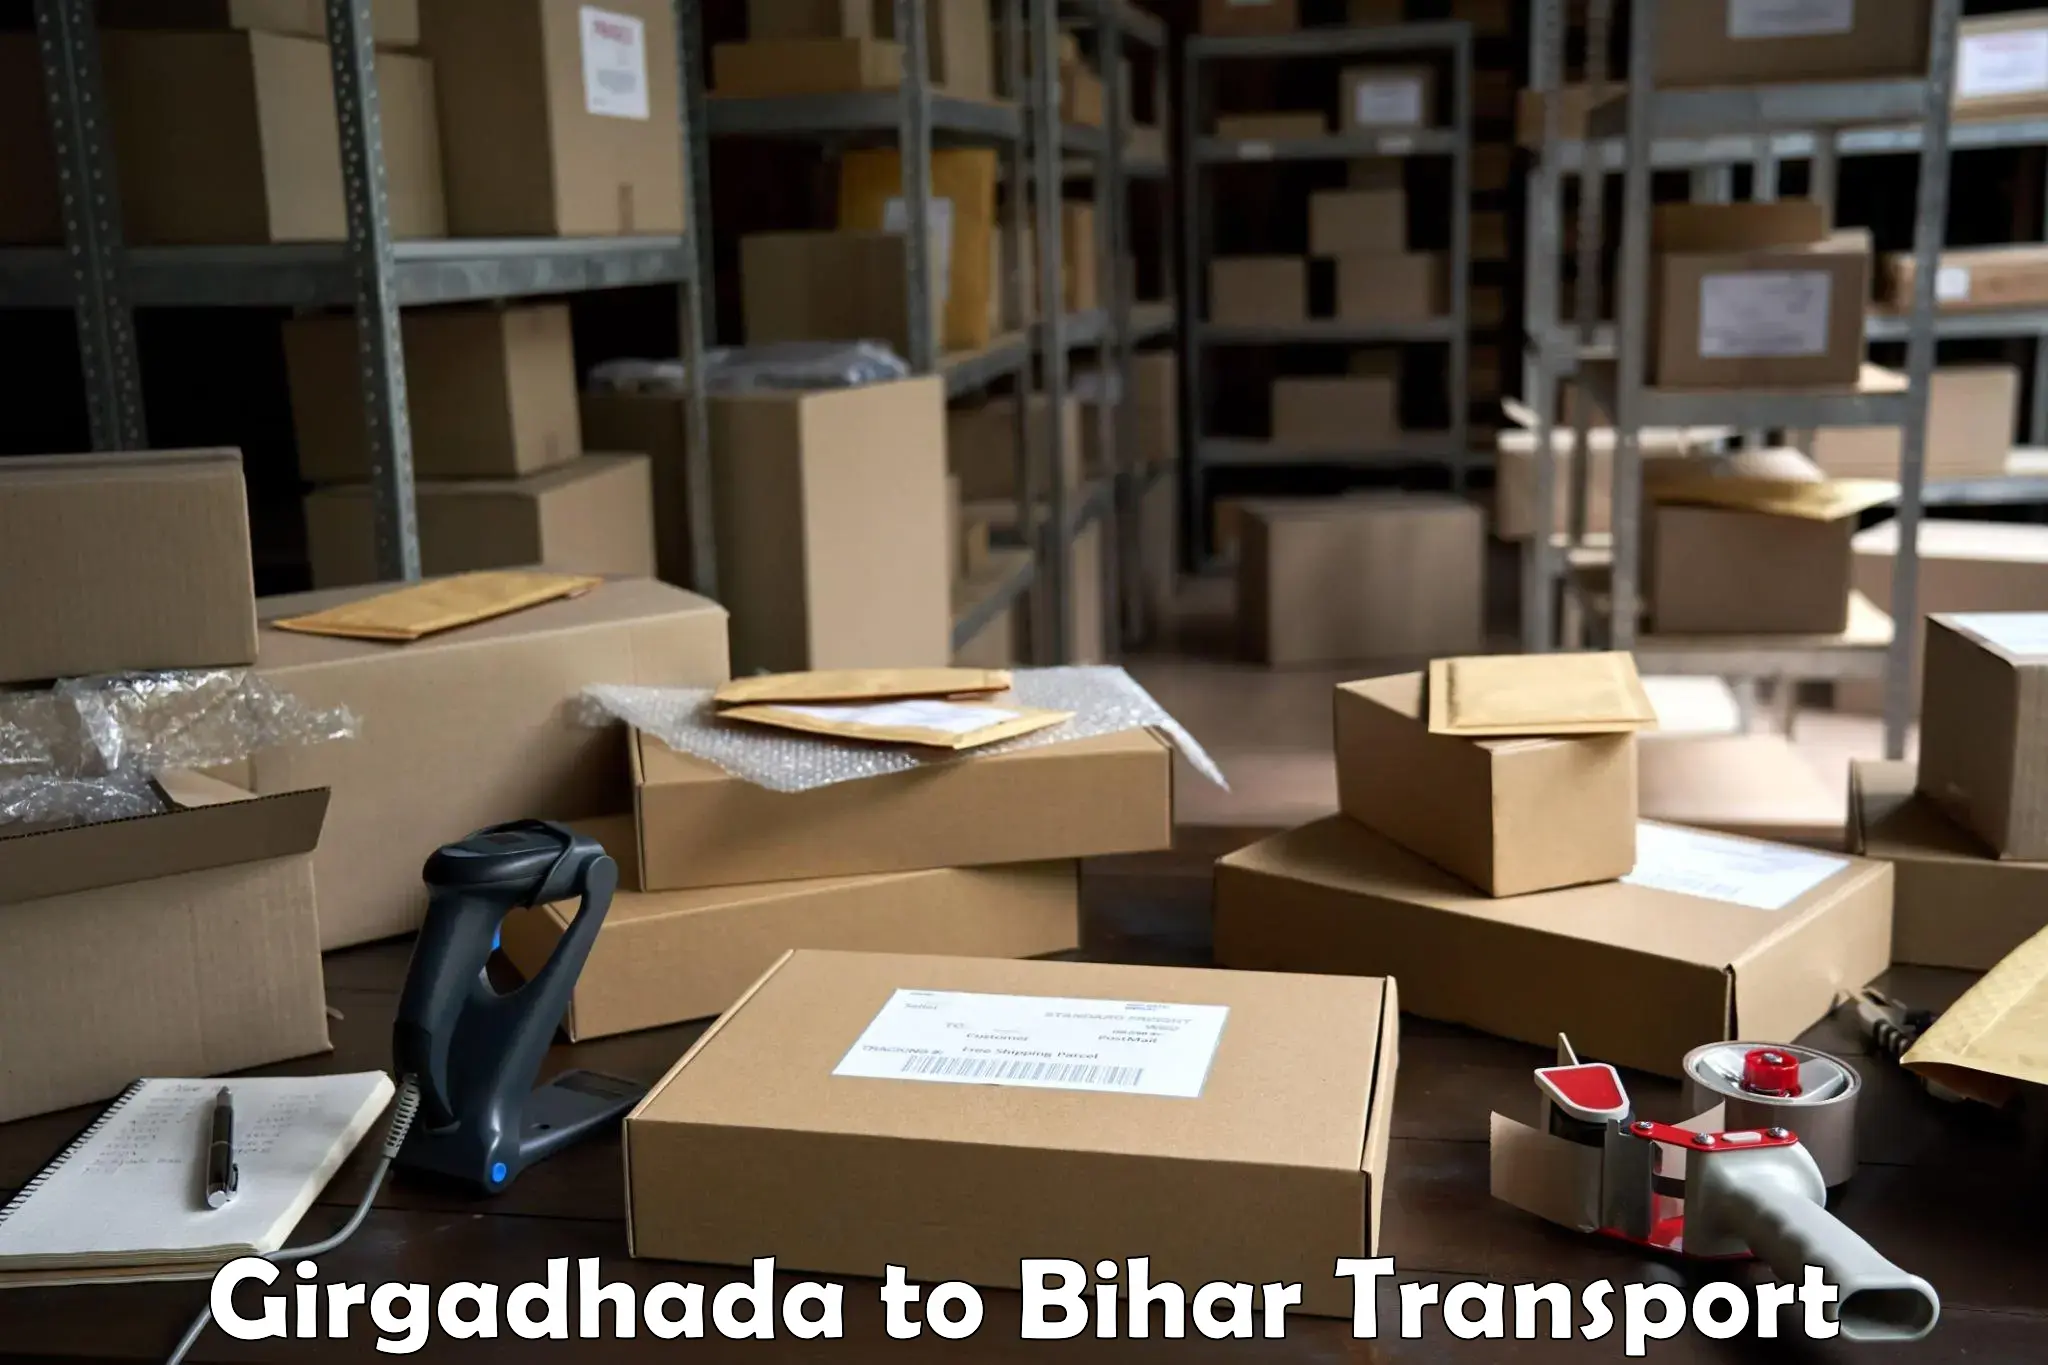 Shipping services in Girgadhada to Khodaganj